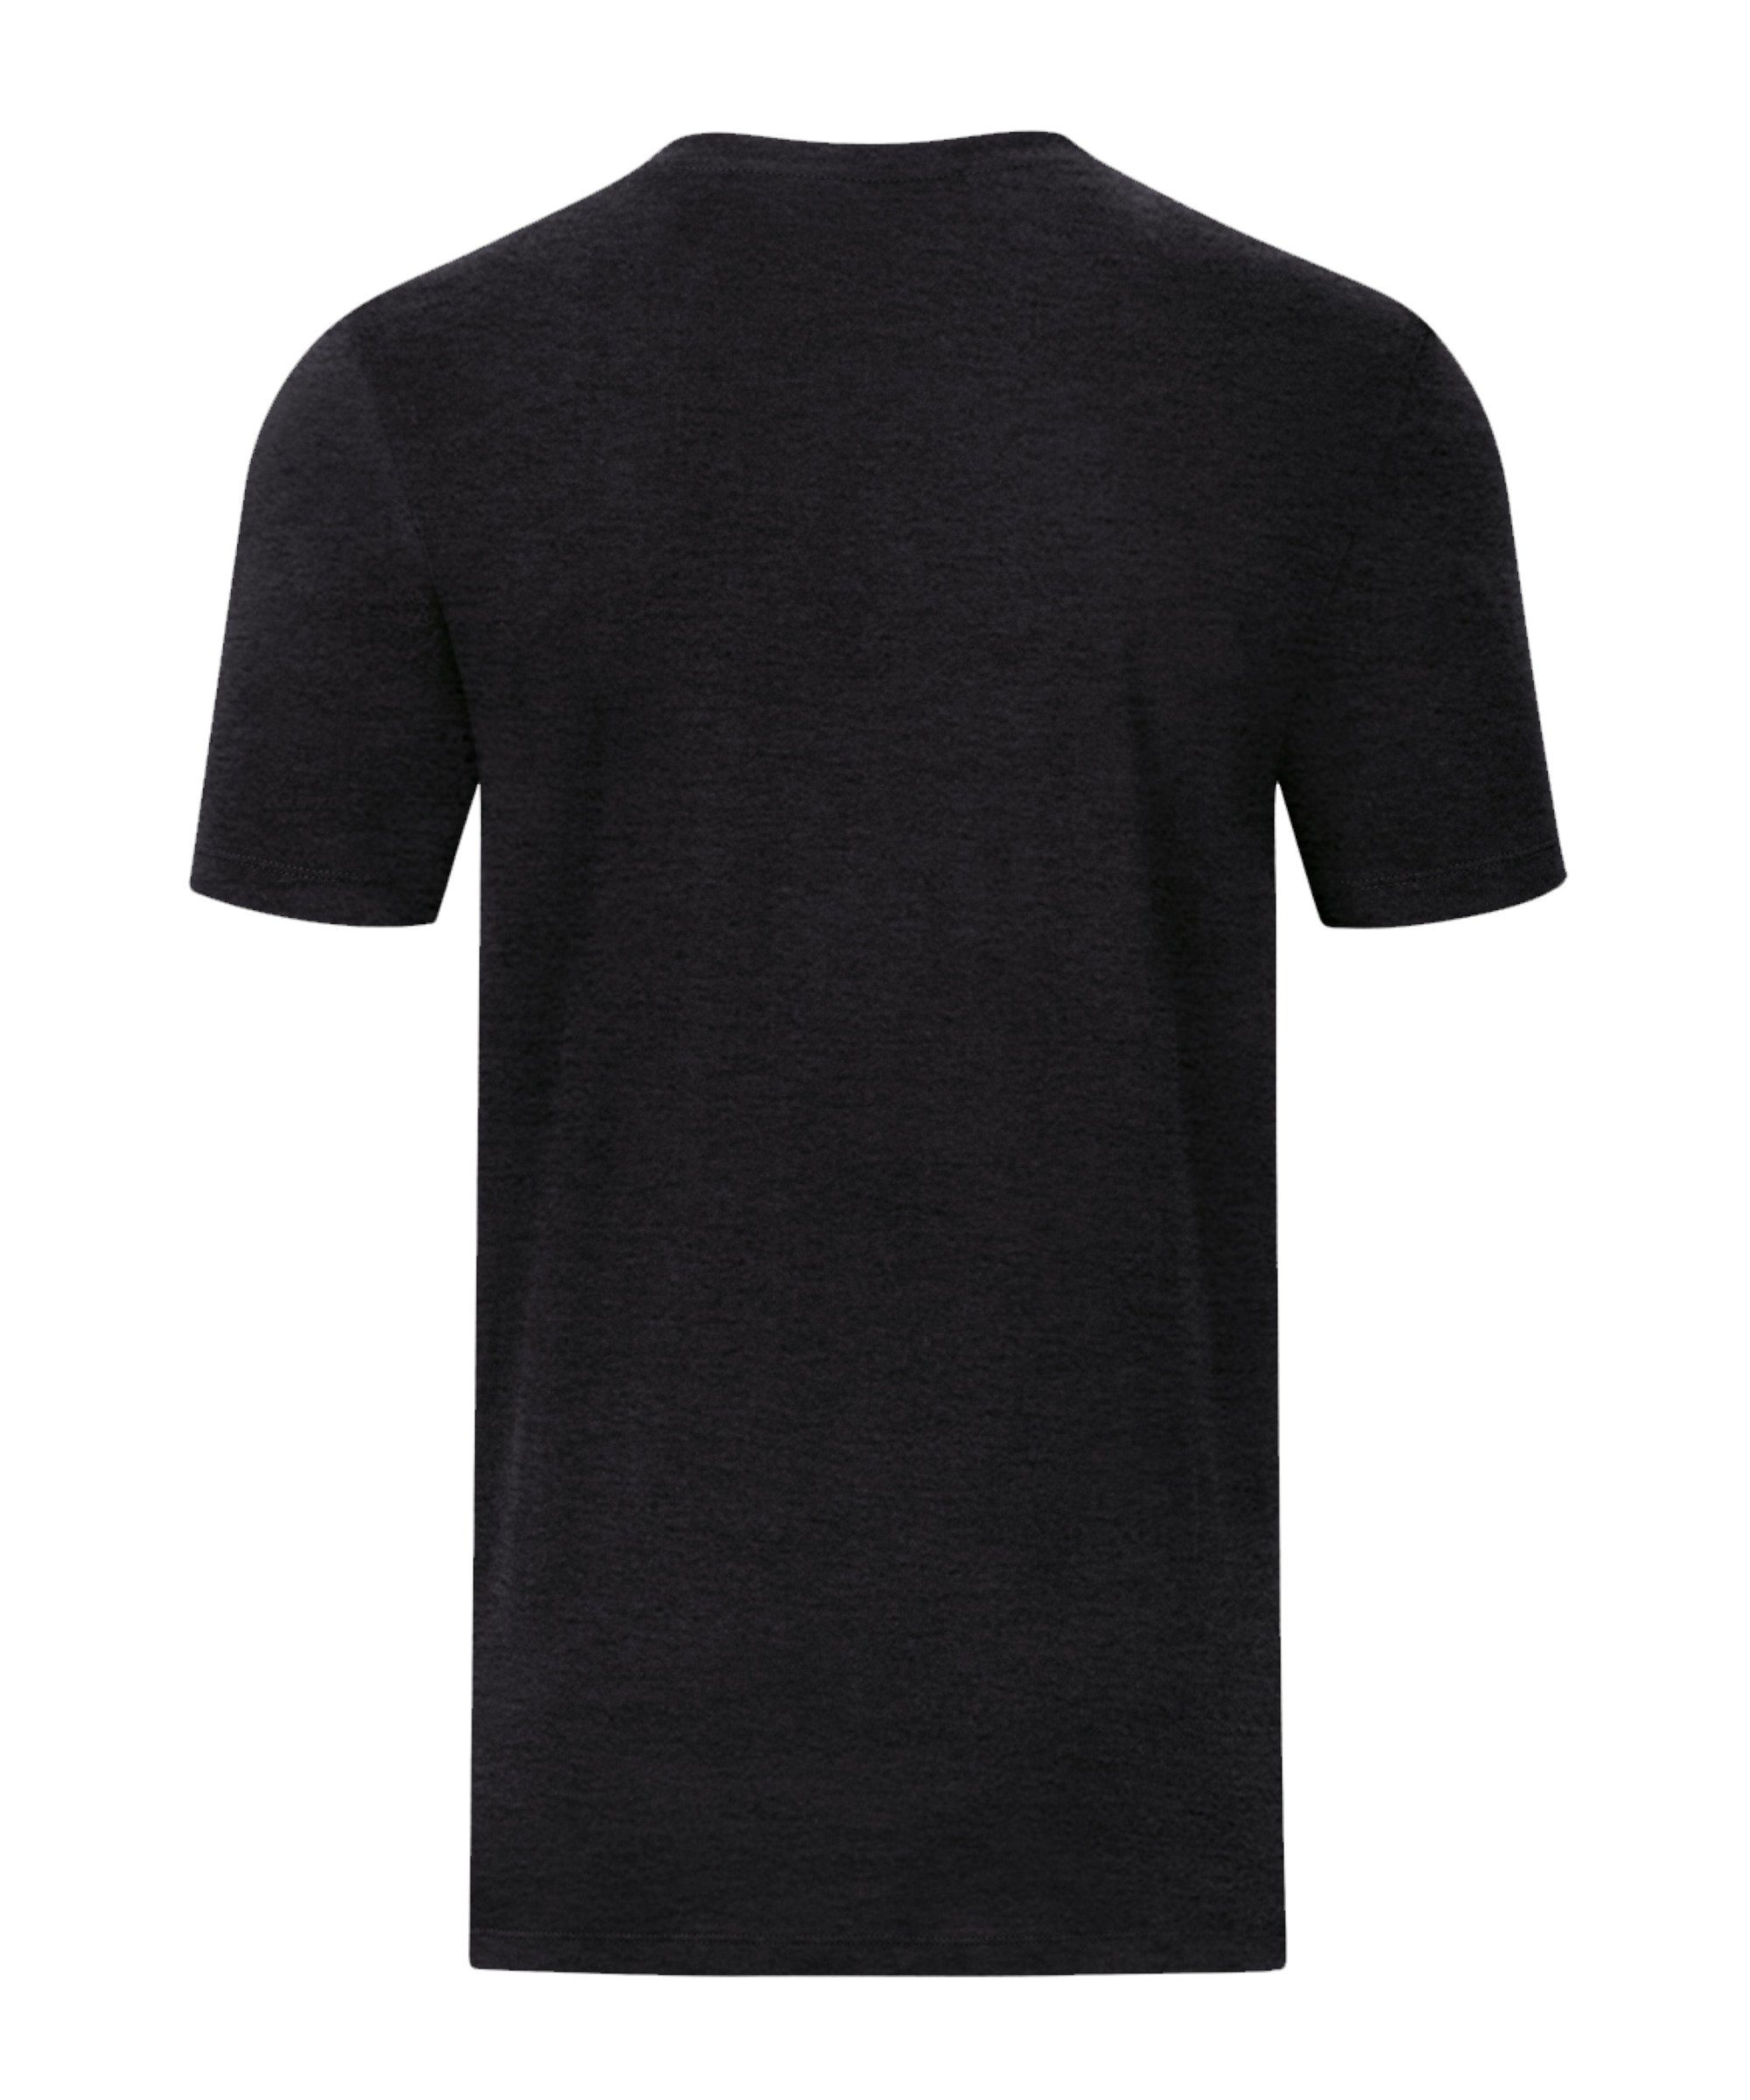 Promo schwarzgelb Jako T-Shirt default T-Shirt